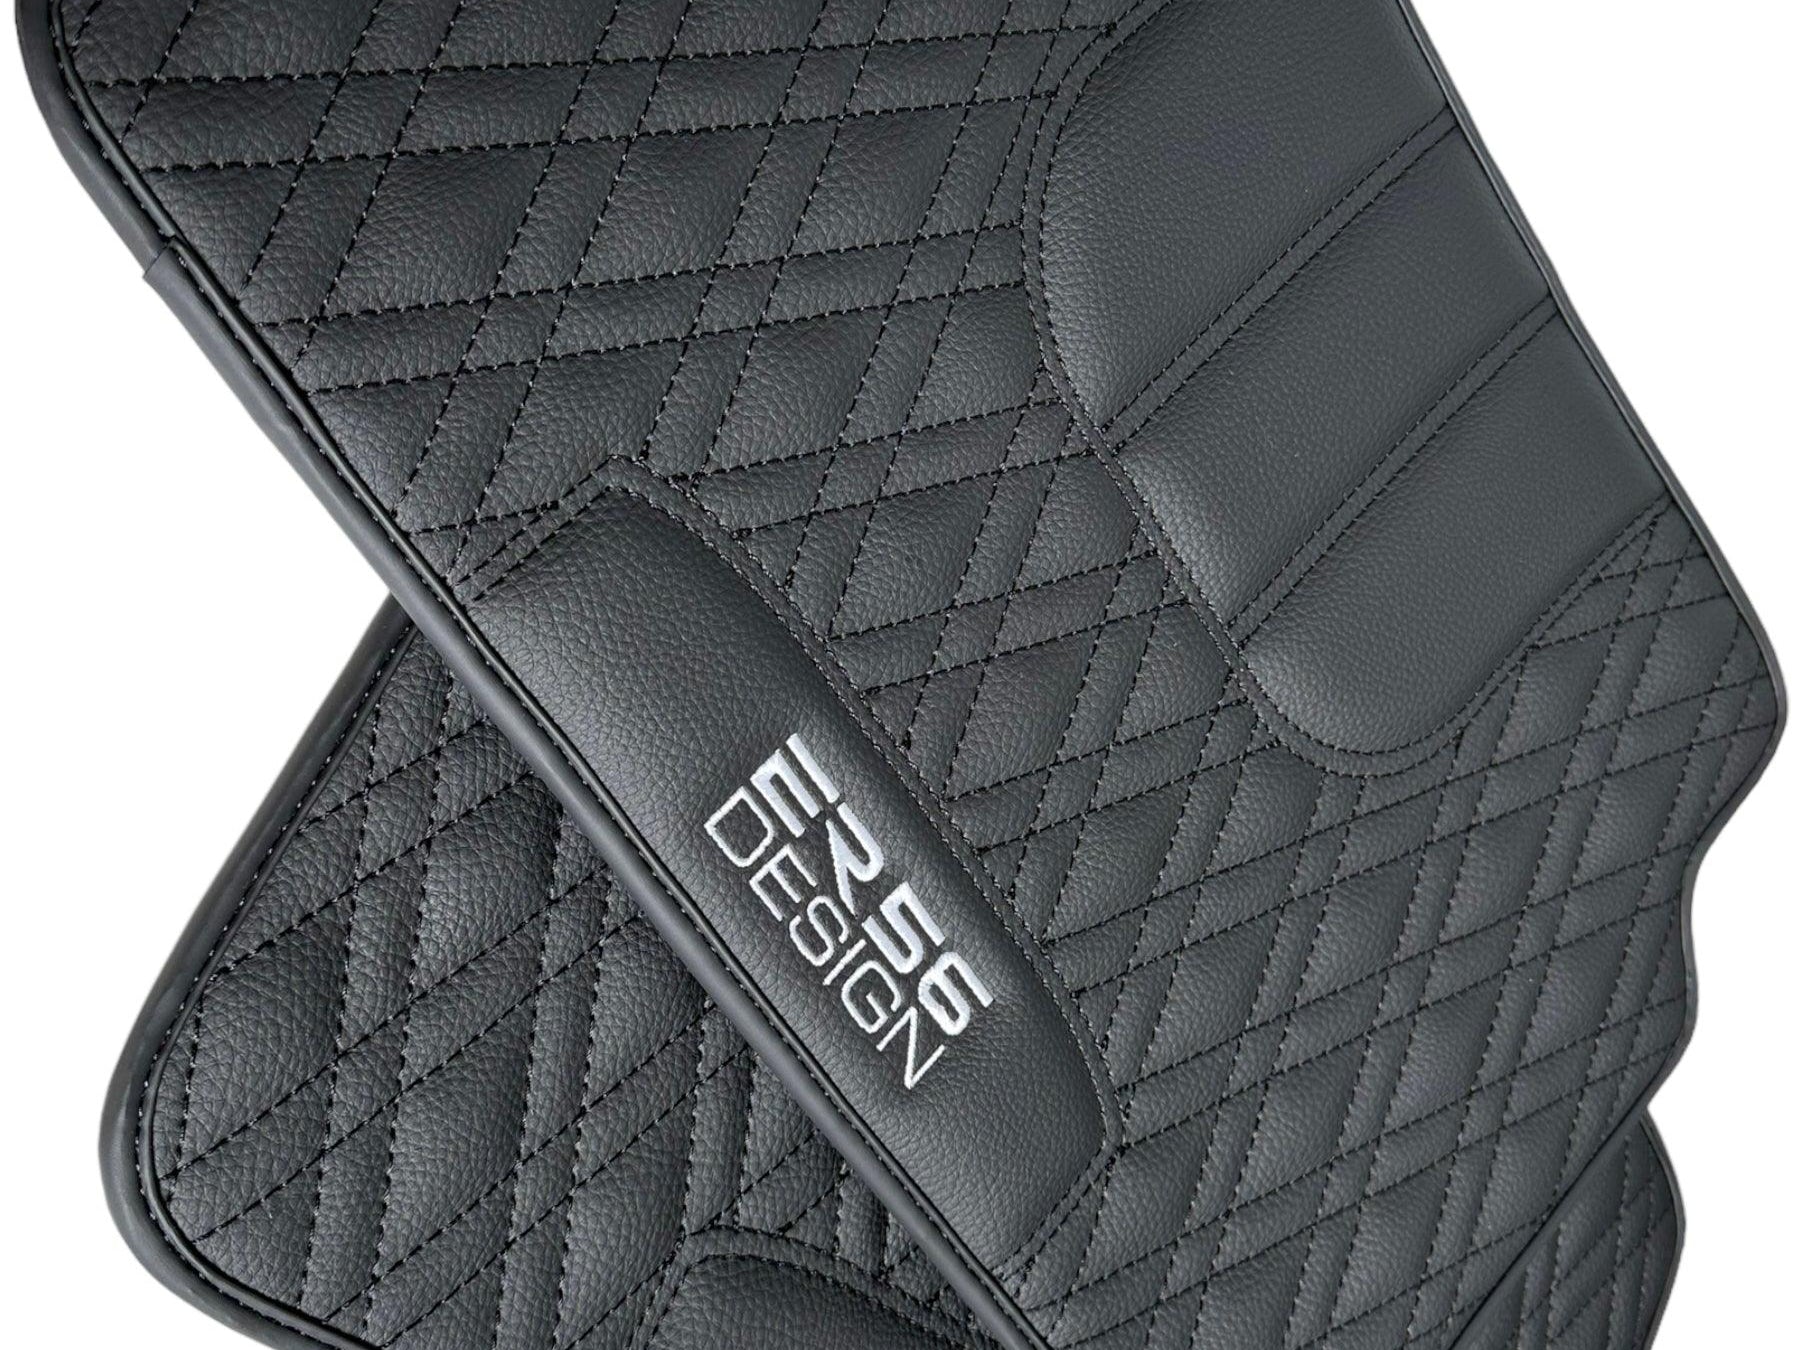 Floor Mats For BMW M3 F80 Series Black Leather Er56 Design - AutoWin